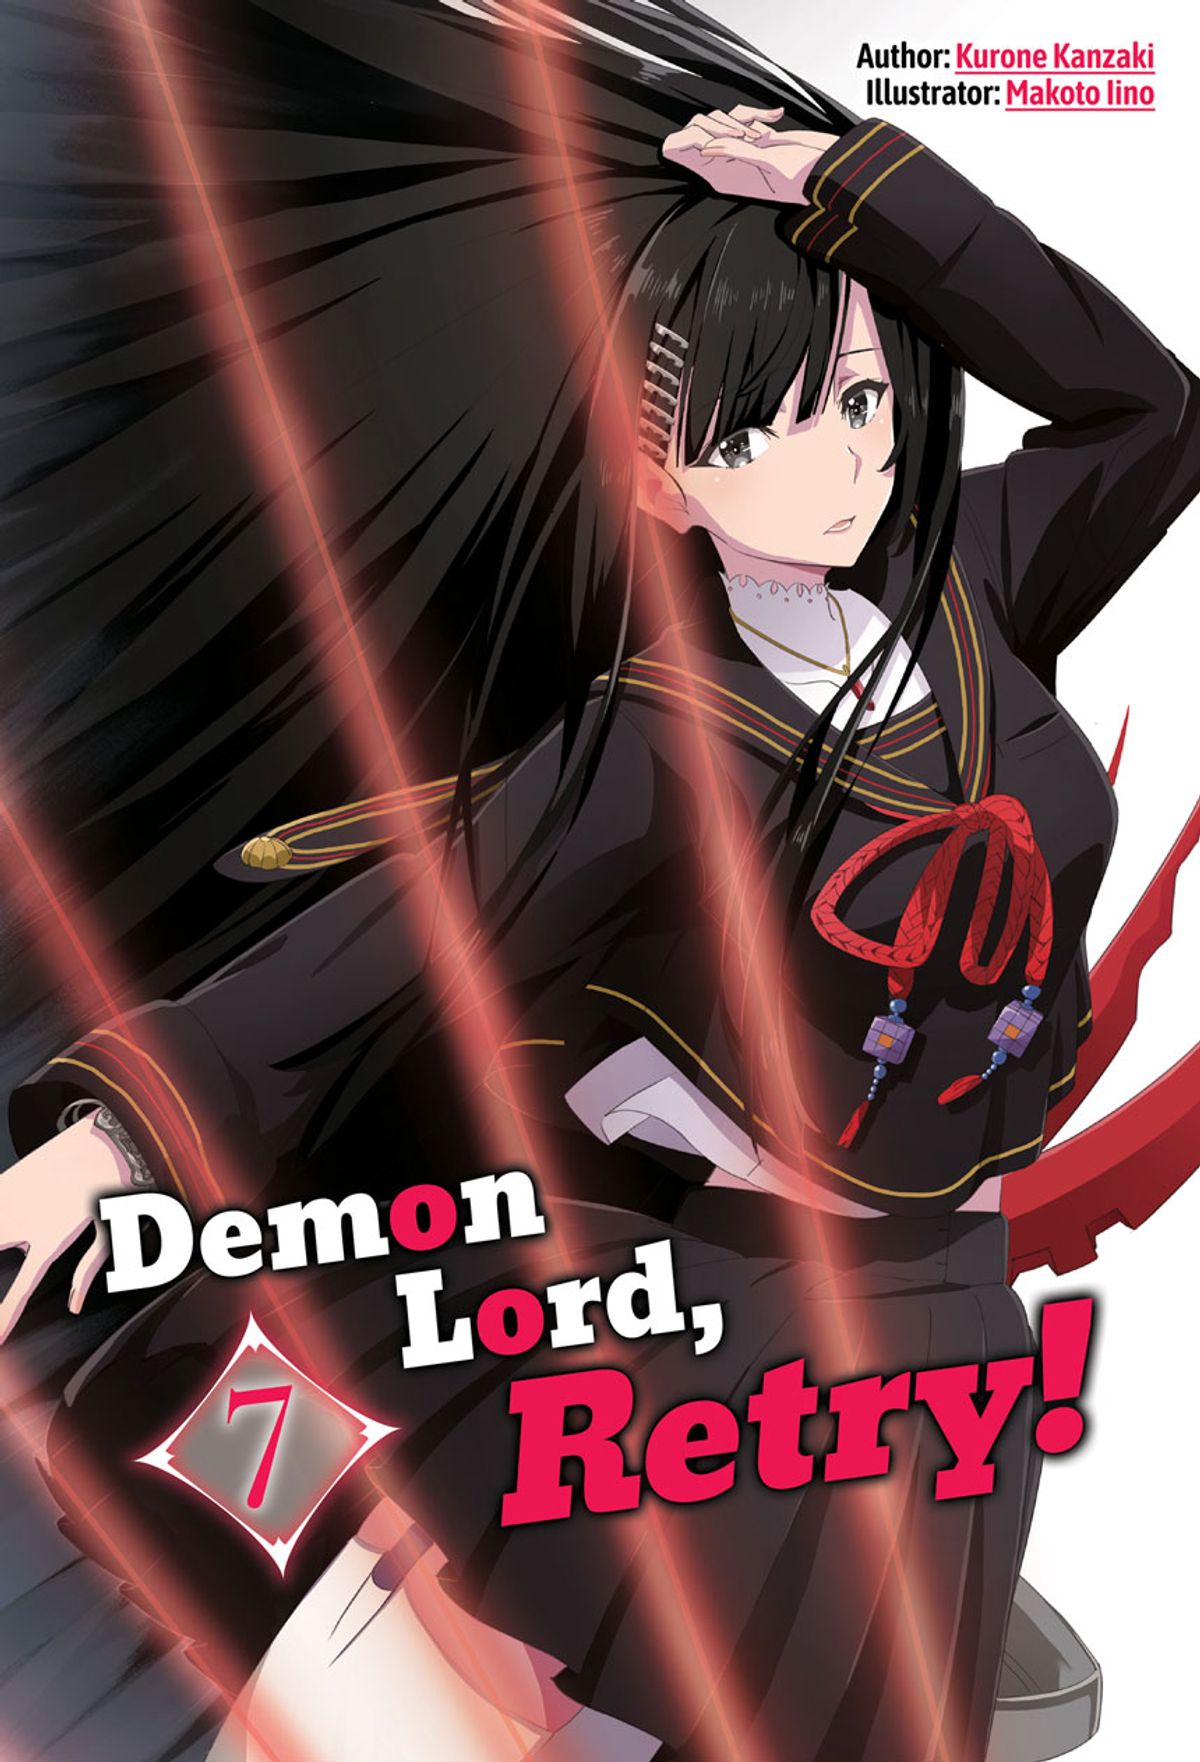 Volume 08, Demon Lord, Retry! Wiki